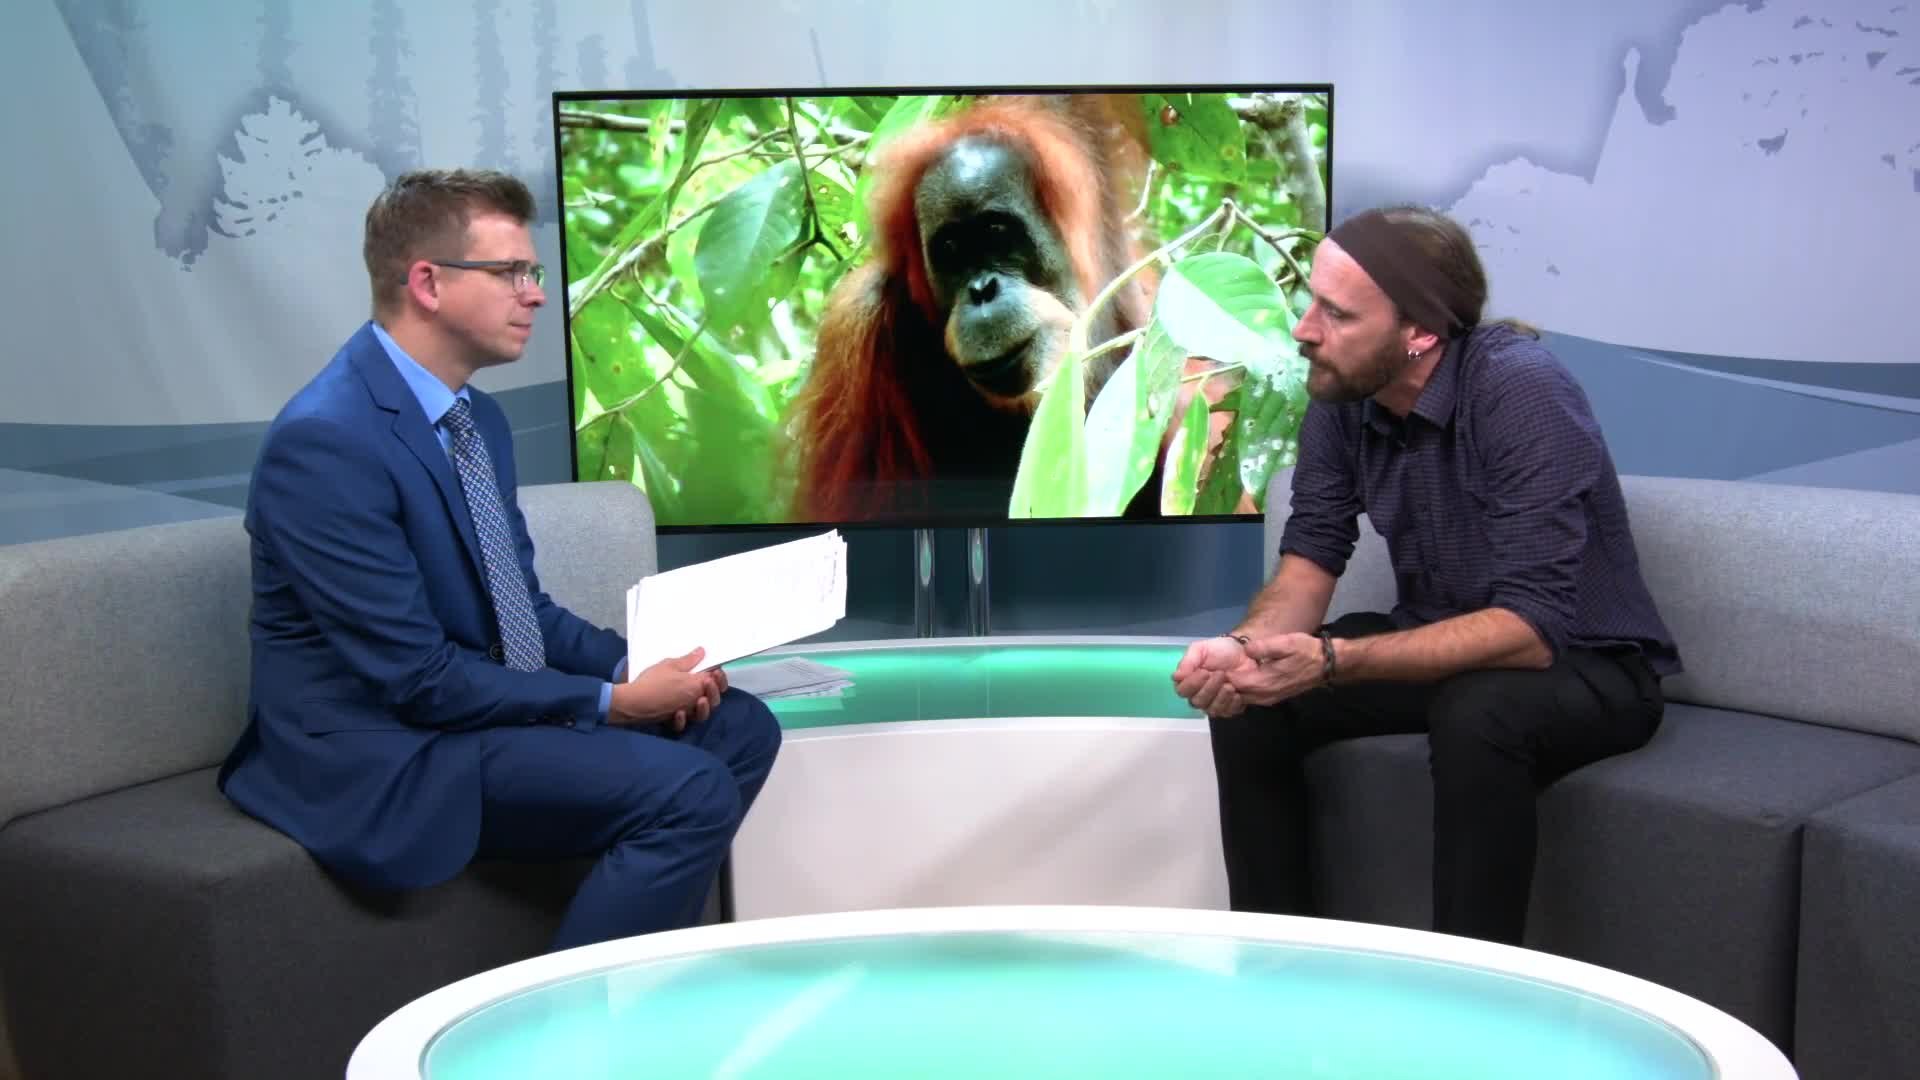 Orangutan danger in South East Asia